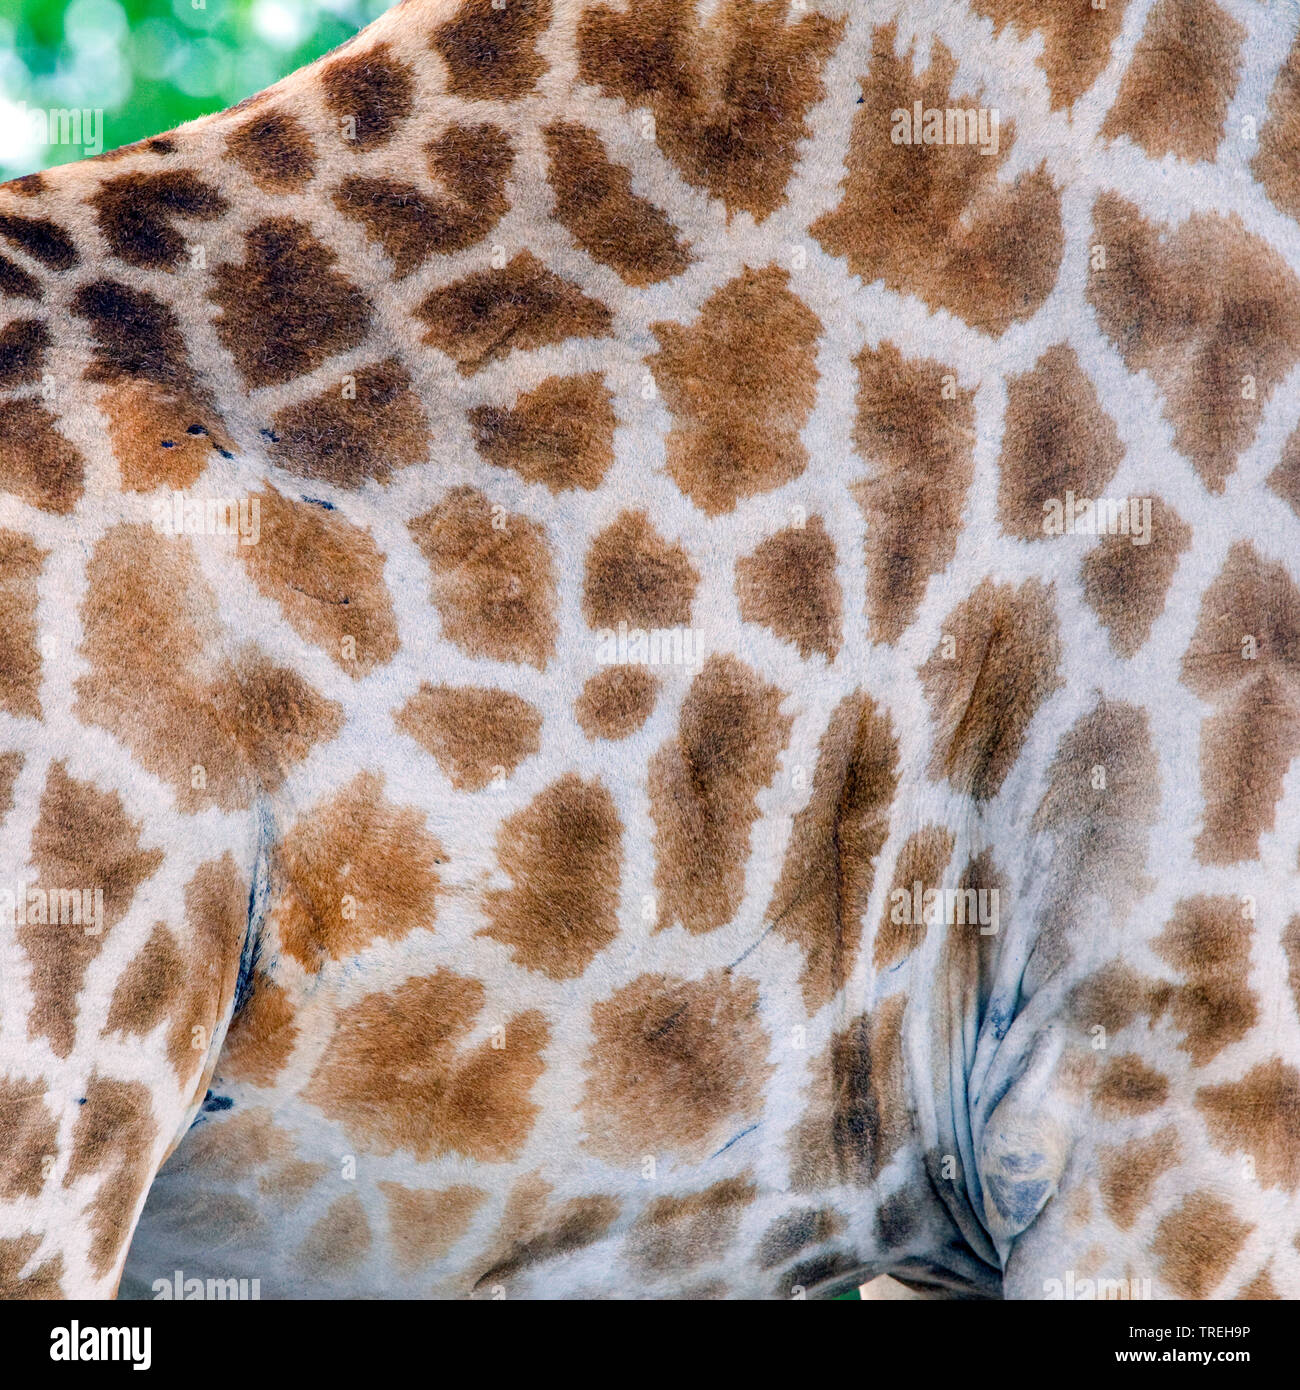 Angolan giraffe, Smoky giraffe (Giraffa camelopardalis angolensis), fur pattern, Namibia Stock Photo